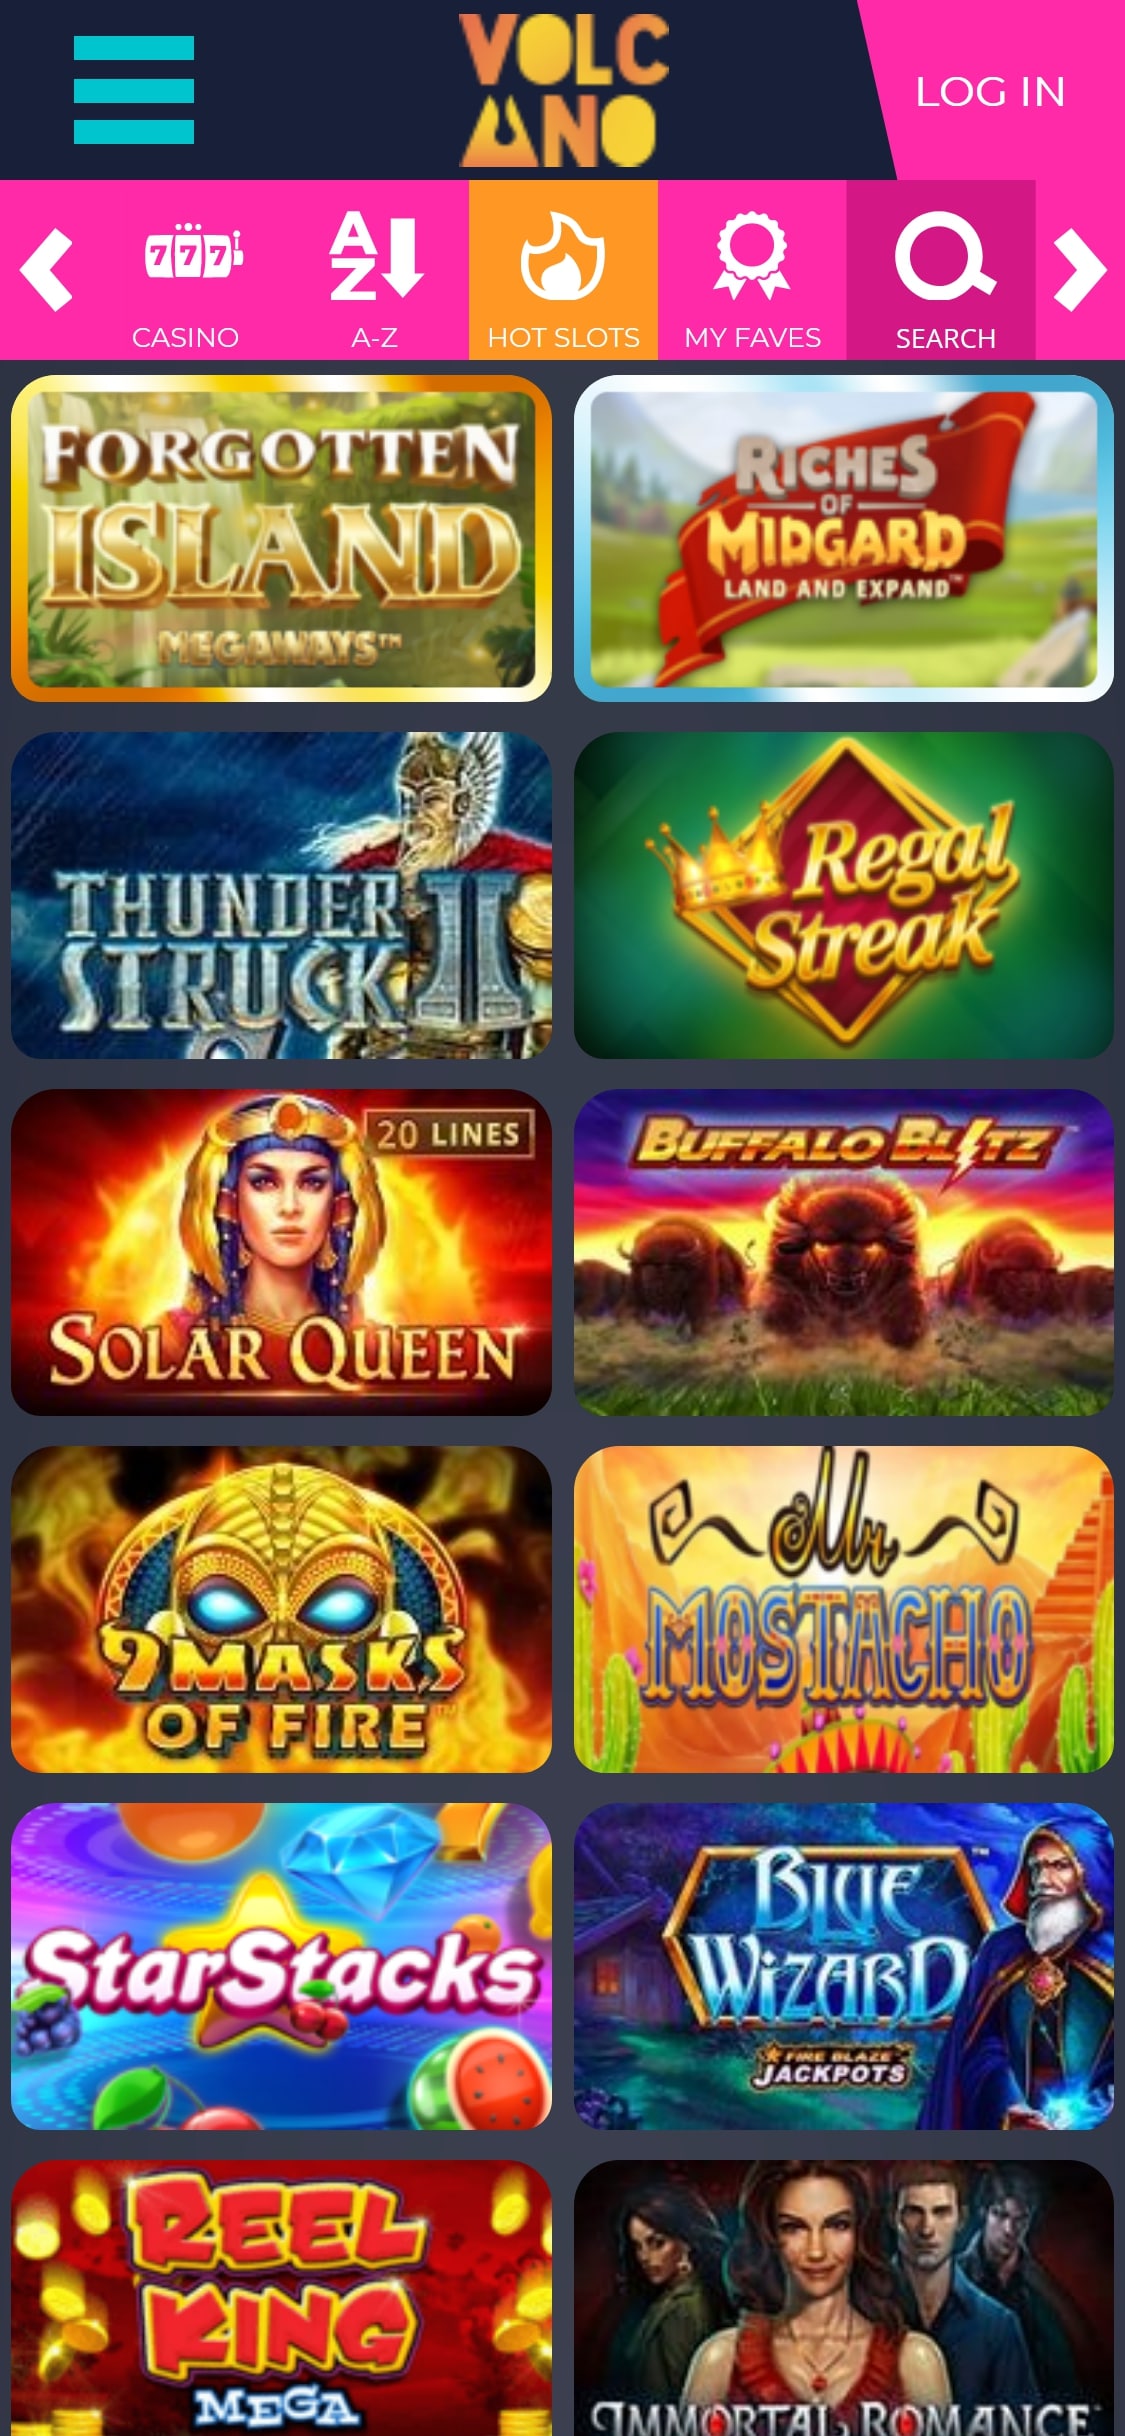 Volcano Bingo Casino Mobile Games Review